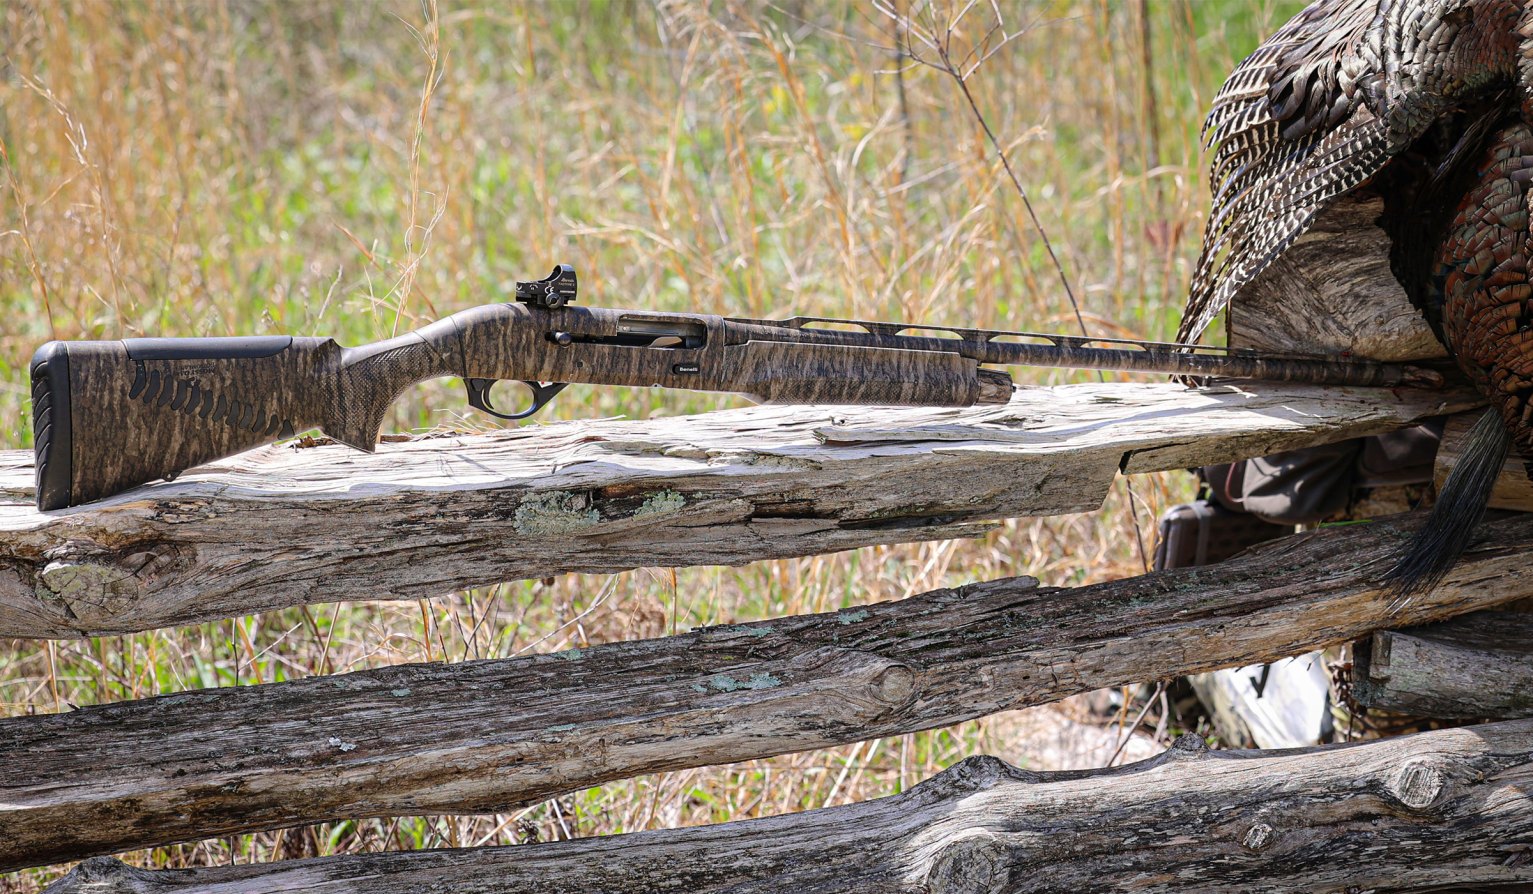 The Benelli M2 Turkey Performance Shop shotgun resting on a split rail fence.